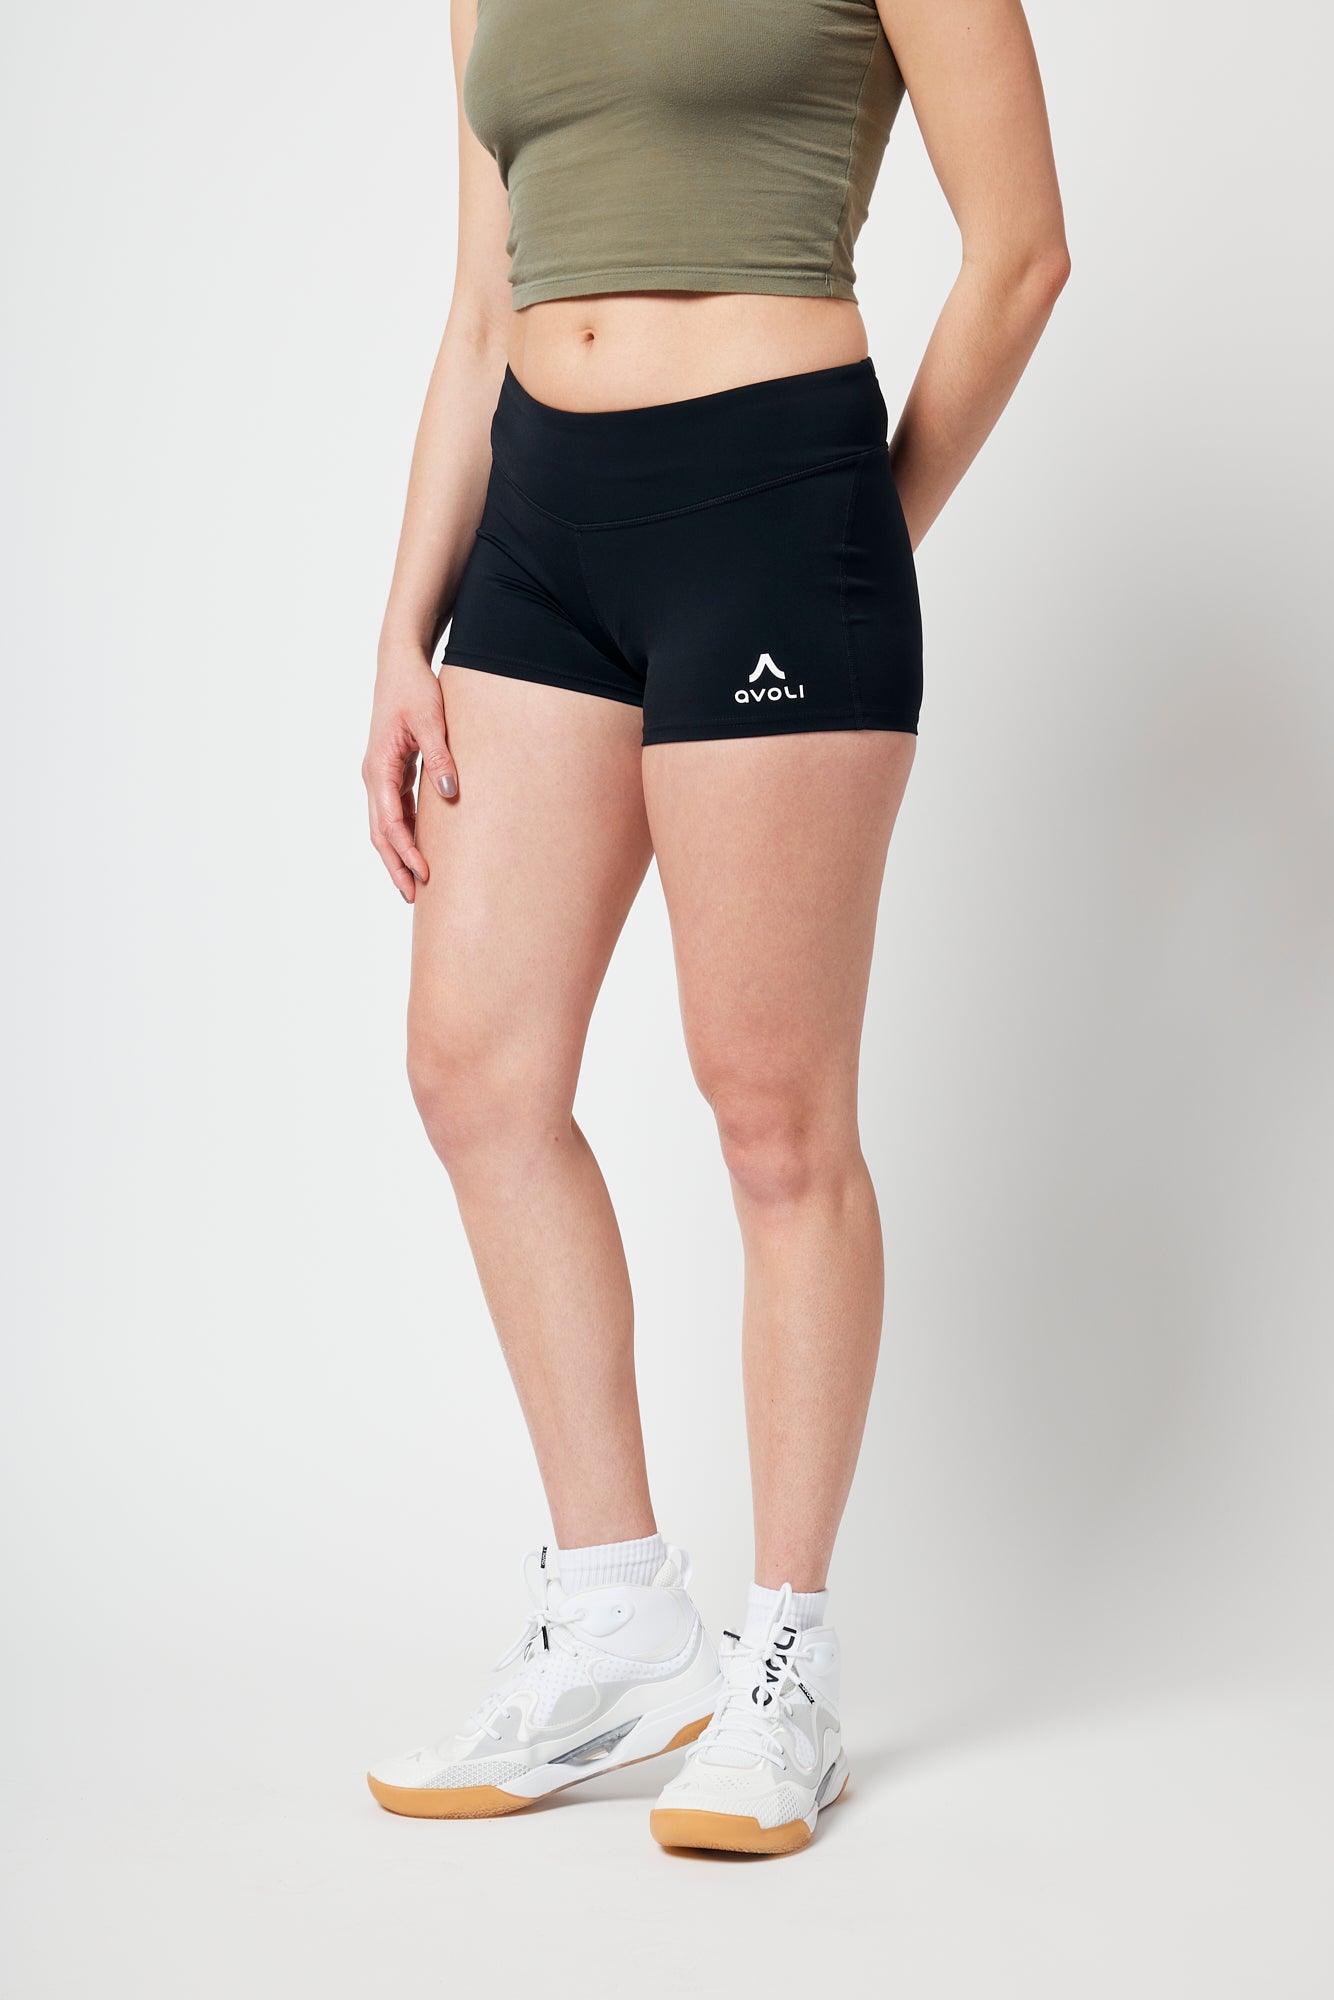 Spandex Volleyball Shorts  3 inch